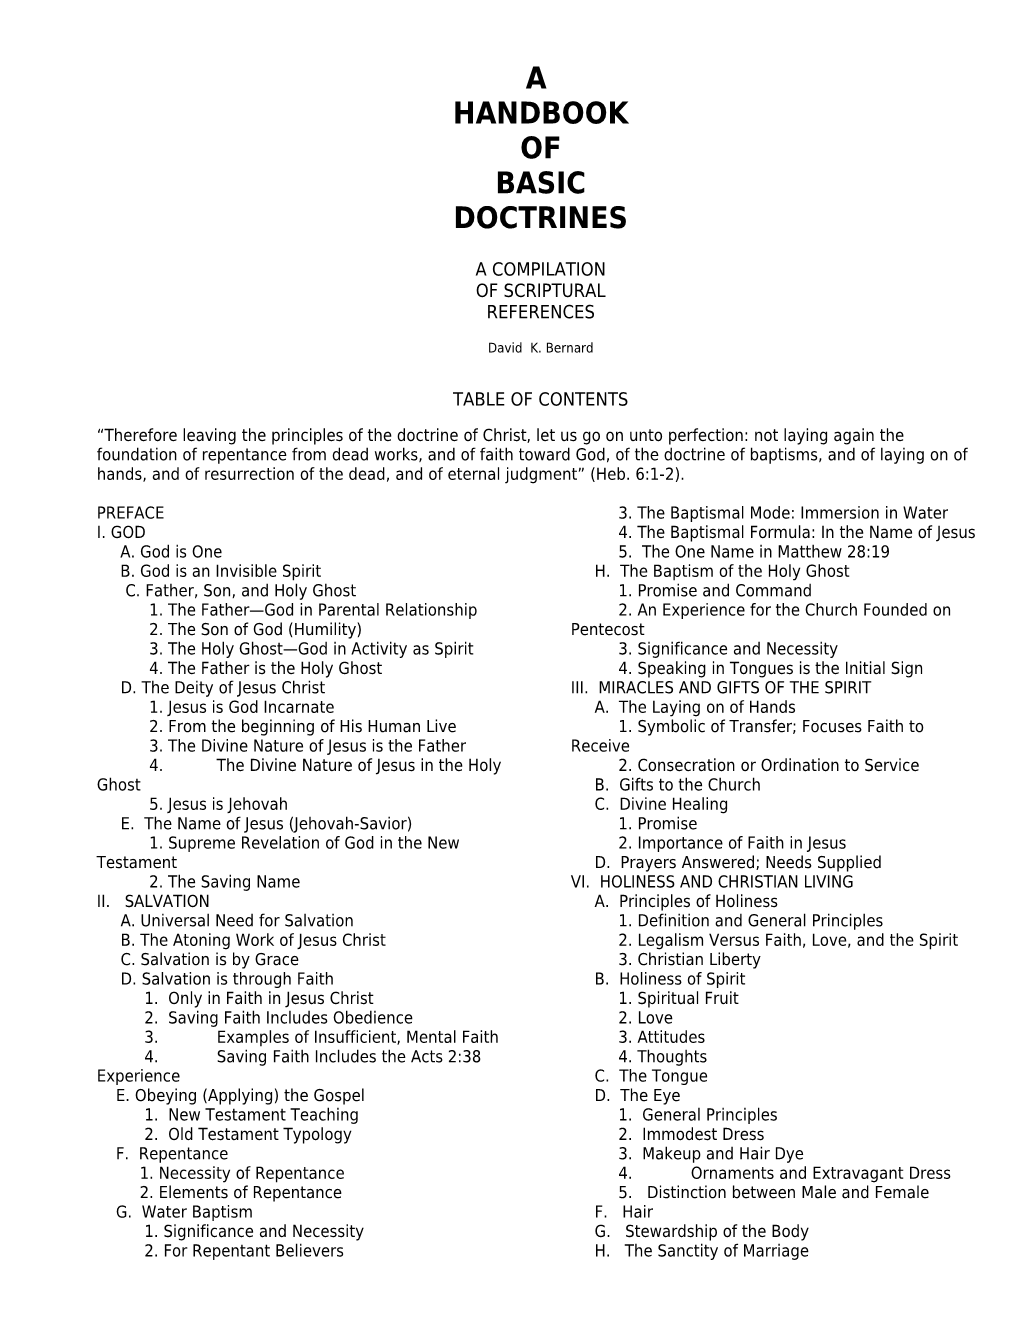 Handbook of Basic Doctrine